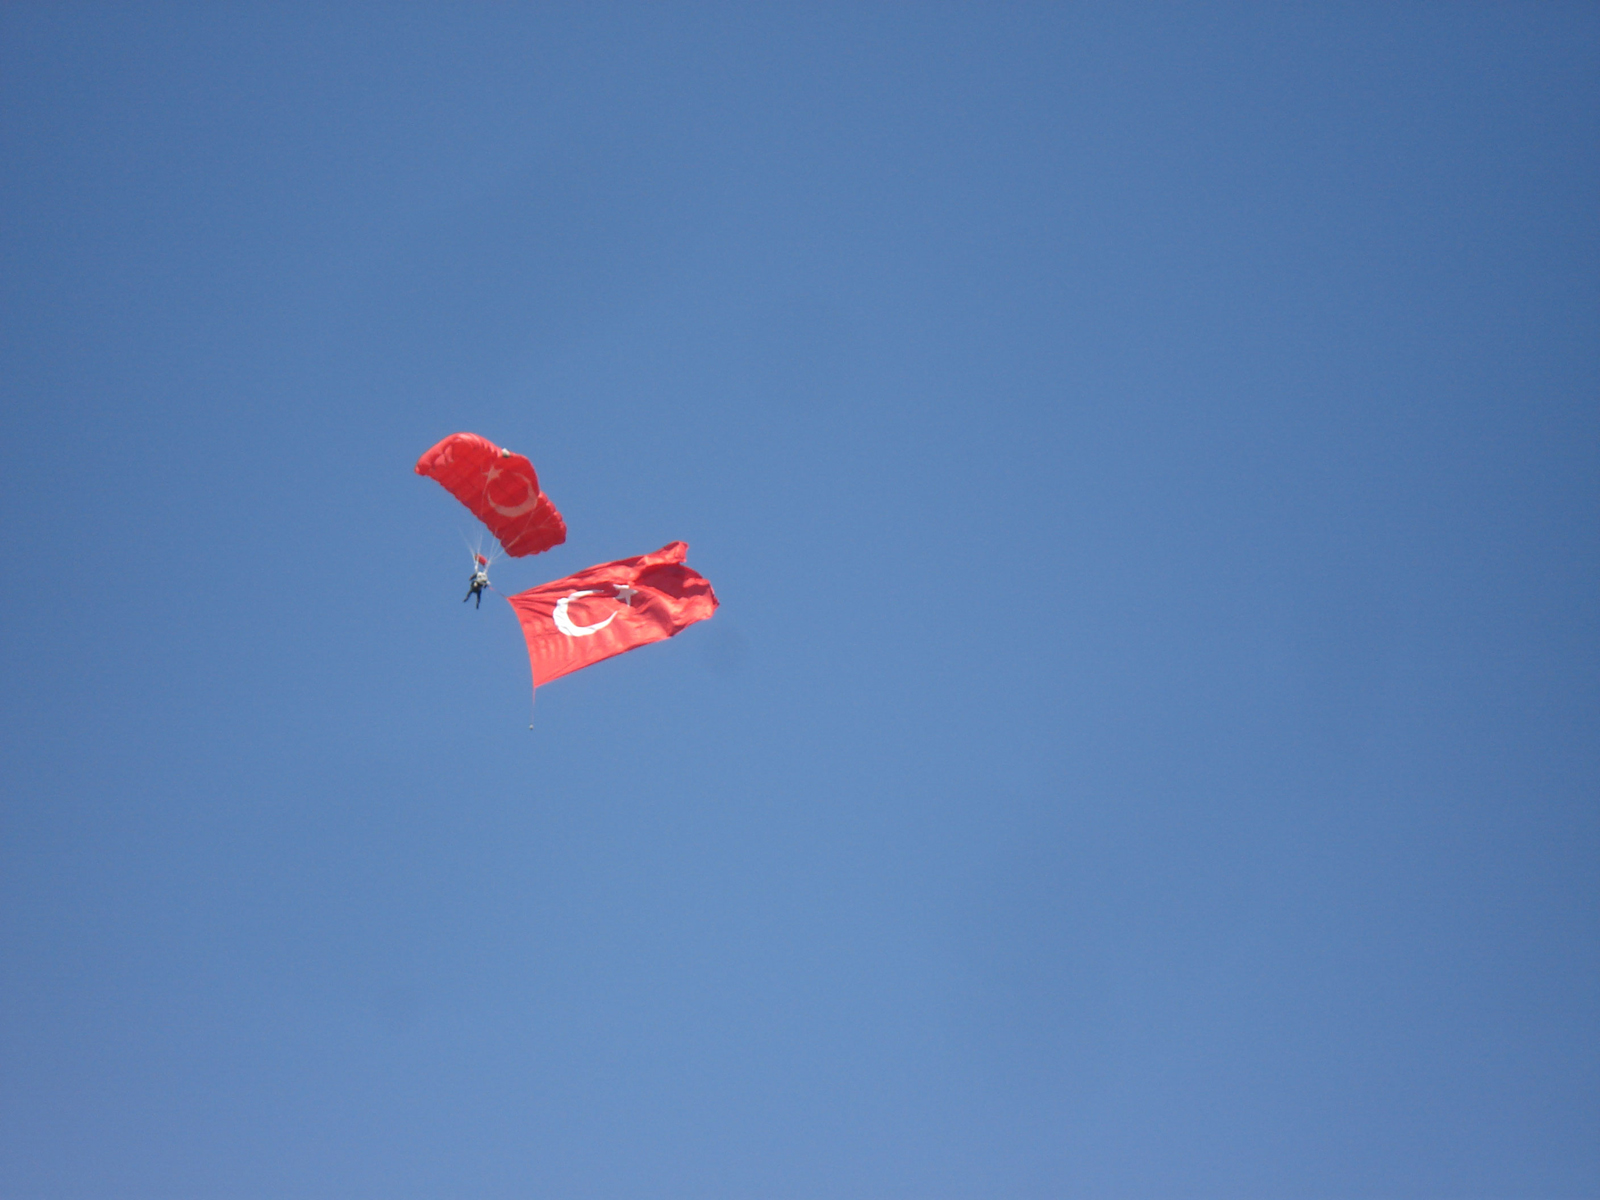 türk bayrağı wallpaper hd 3d,sky,parachute,red,air sports,parachuting